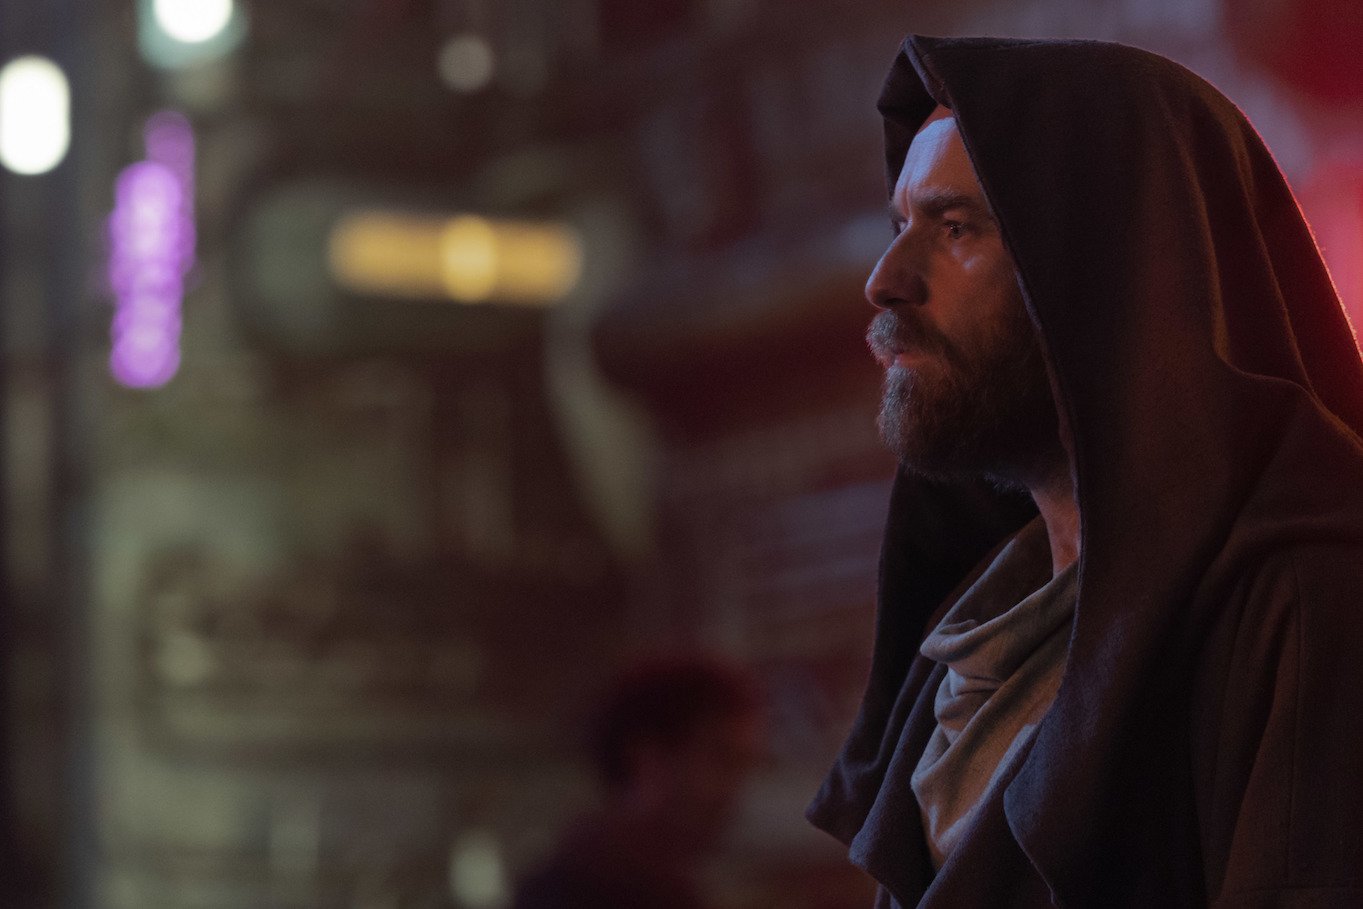 A profile view of Obi-Wan Kenobi in a robe